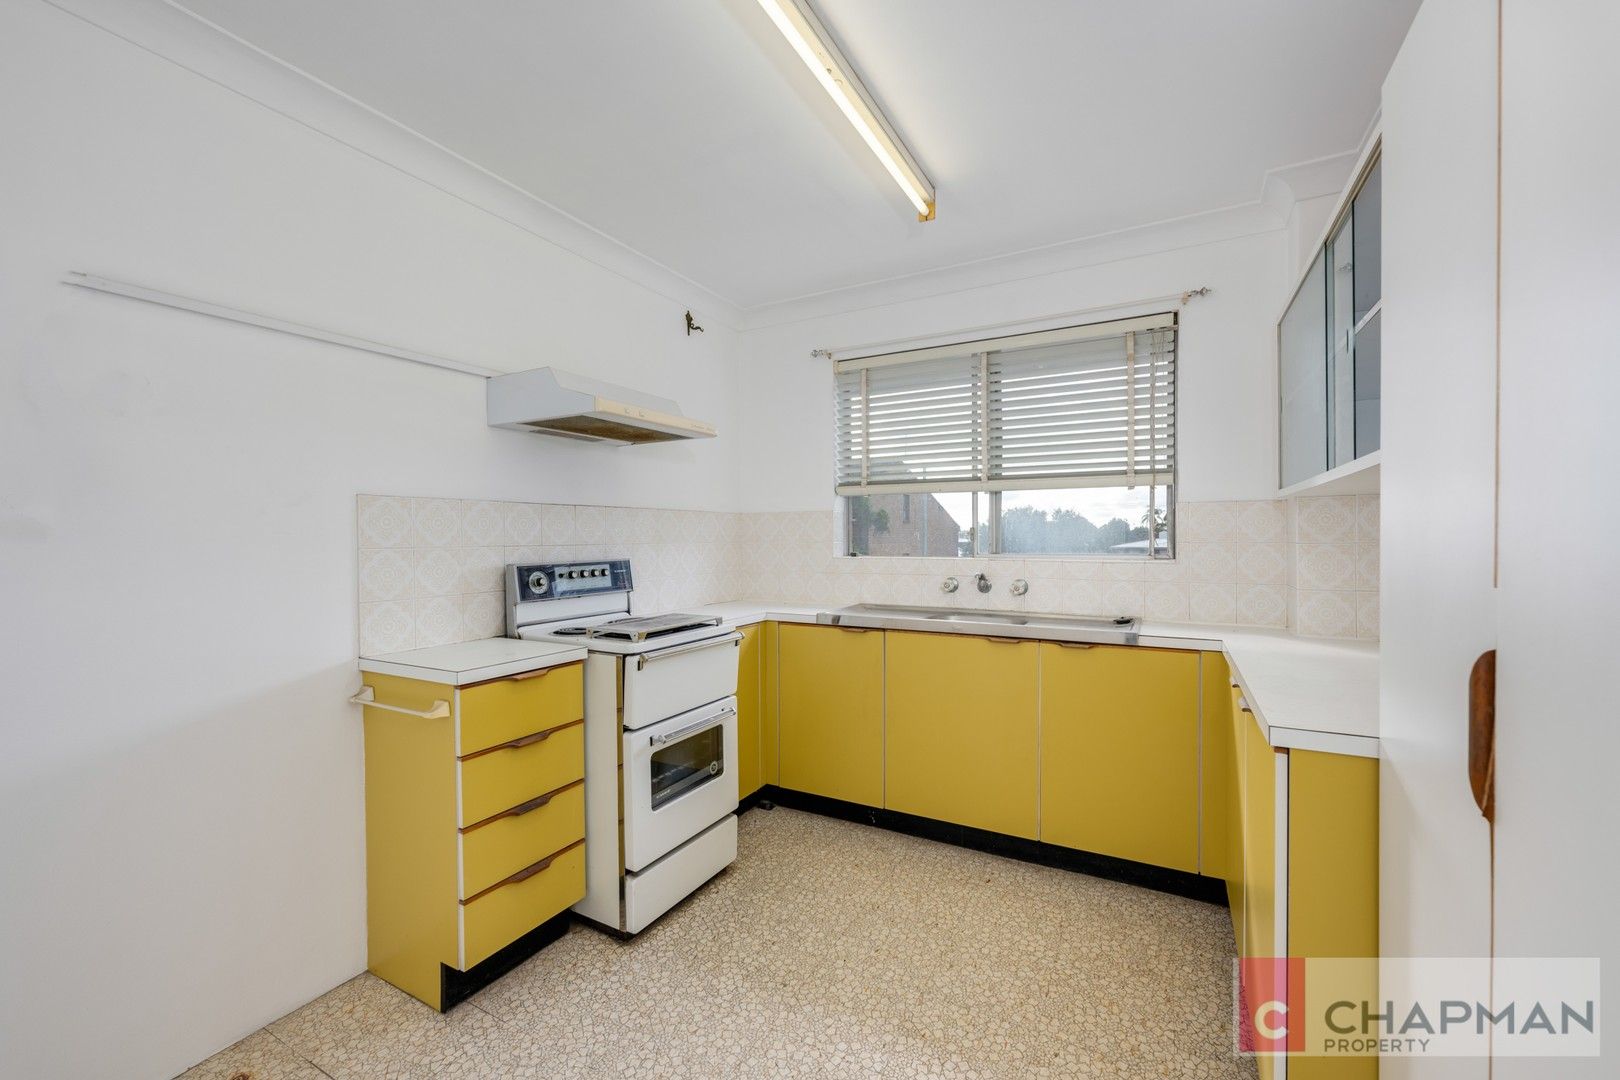 2 bedrooms House in 10/32 Date St ADAMSTOWN NSW, 2289